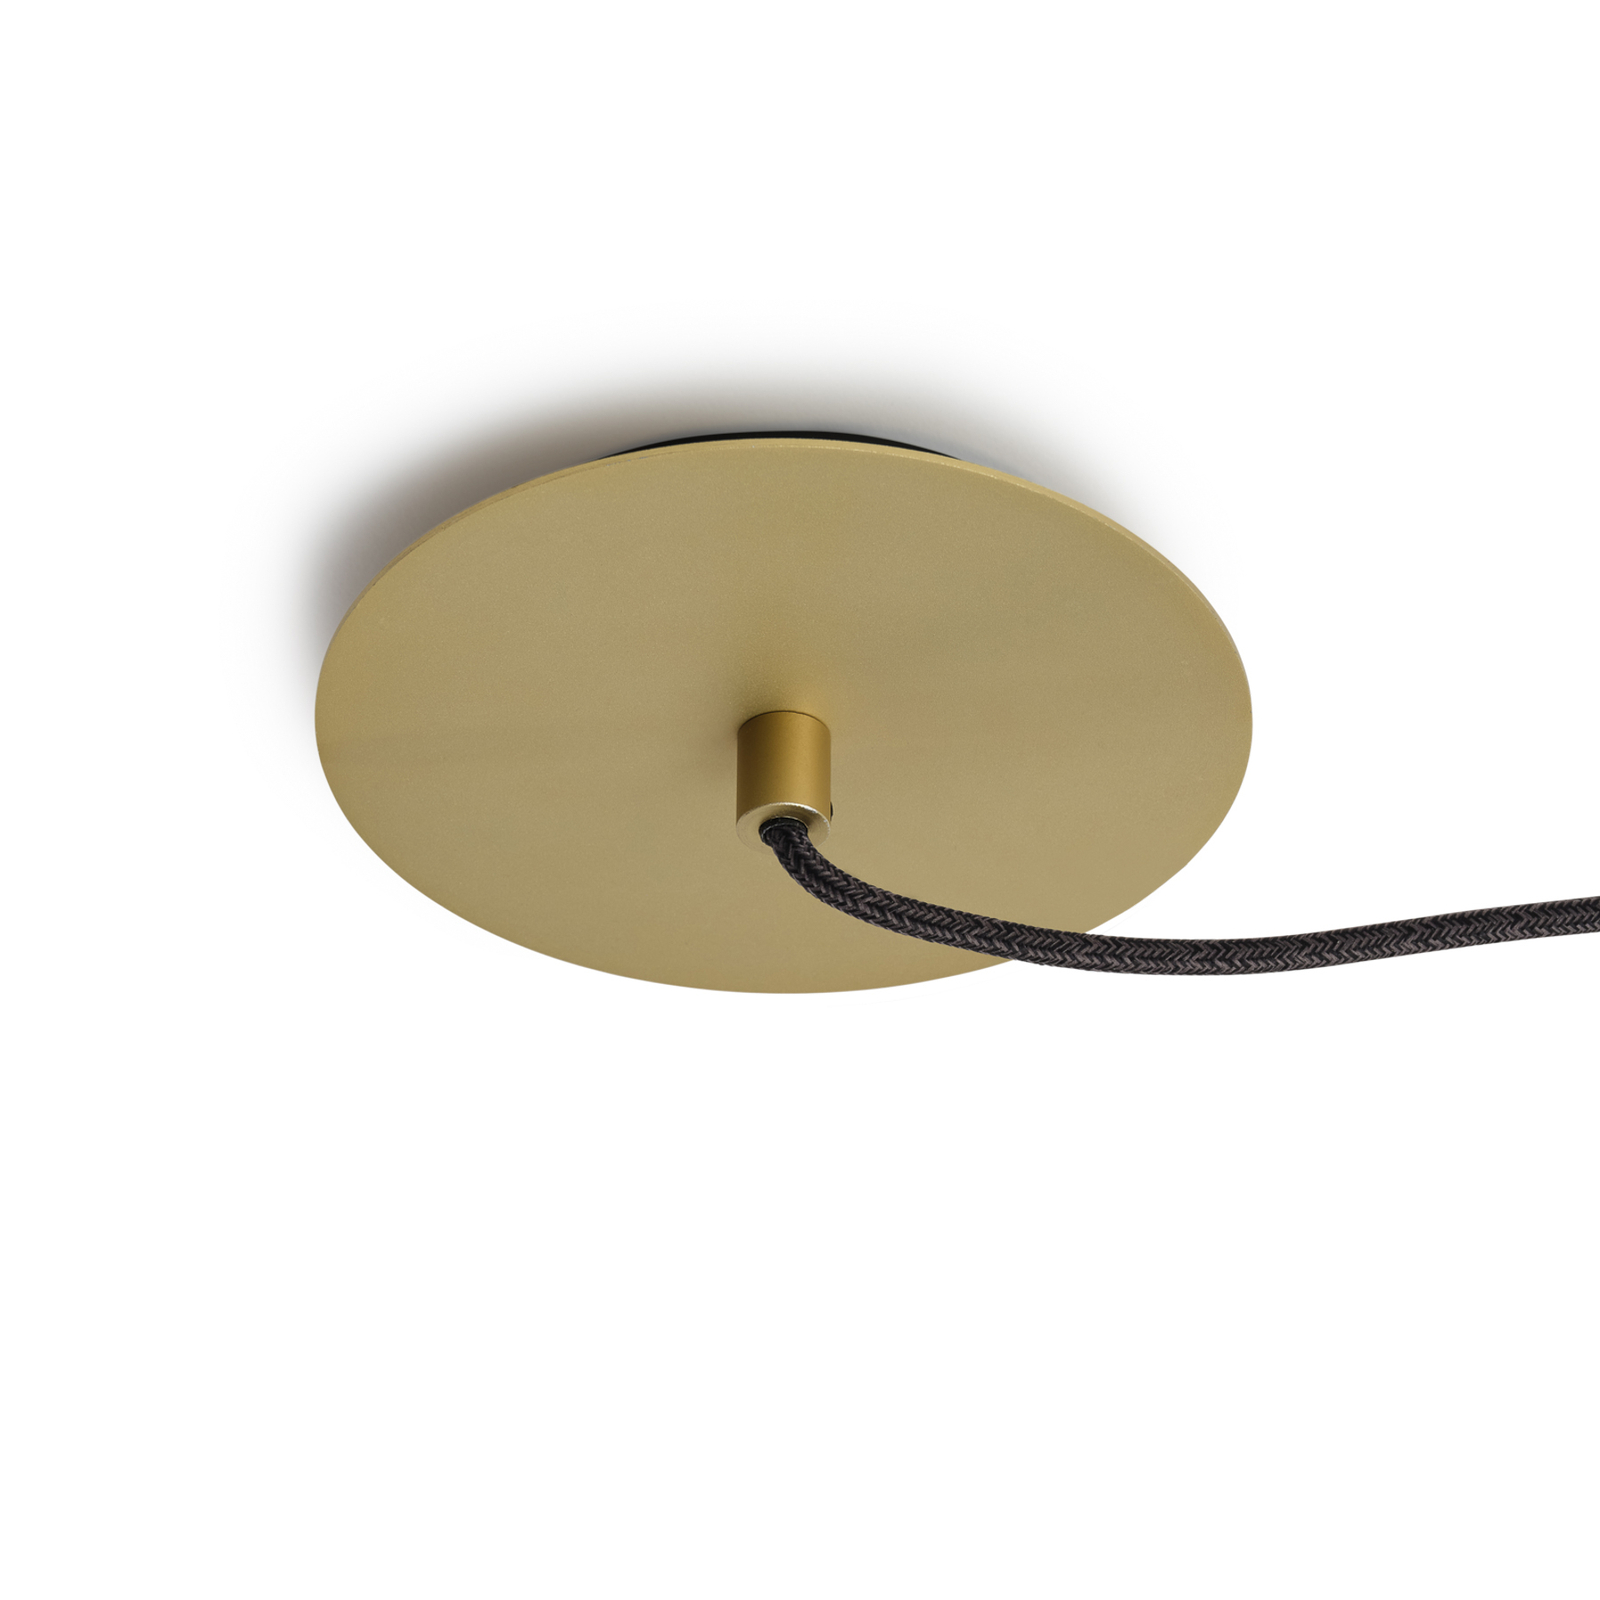 Tala obesek Loop small, aluminij, LED globus IV, zlata